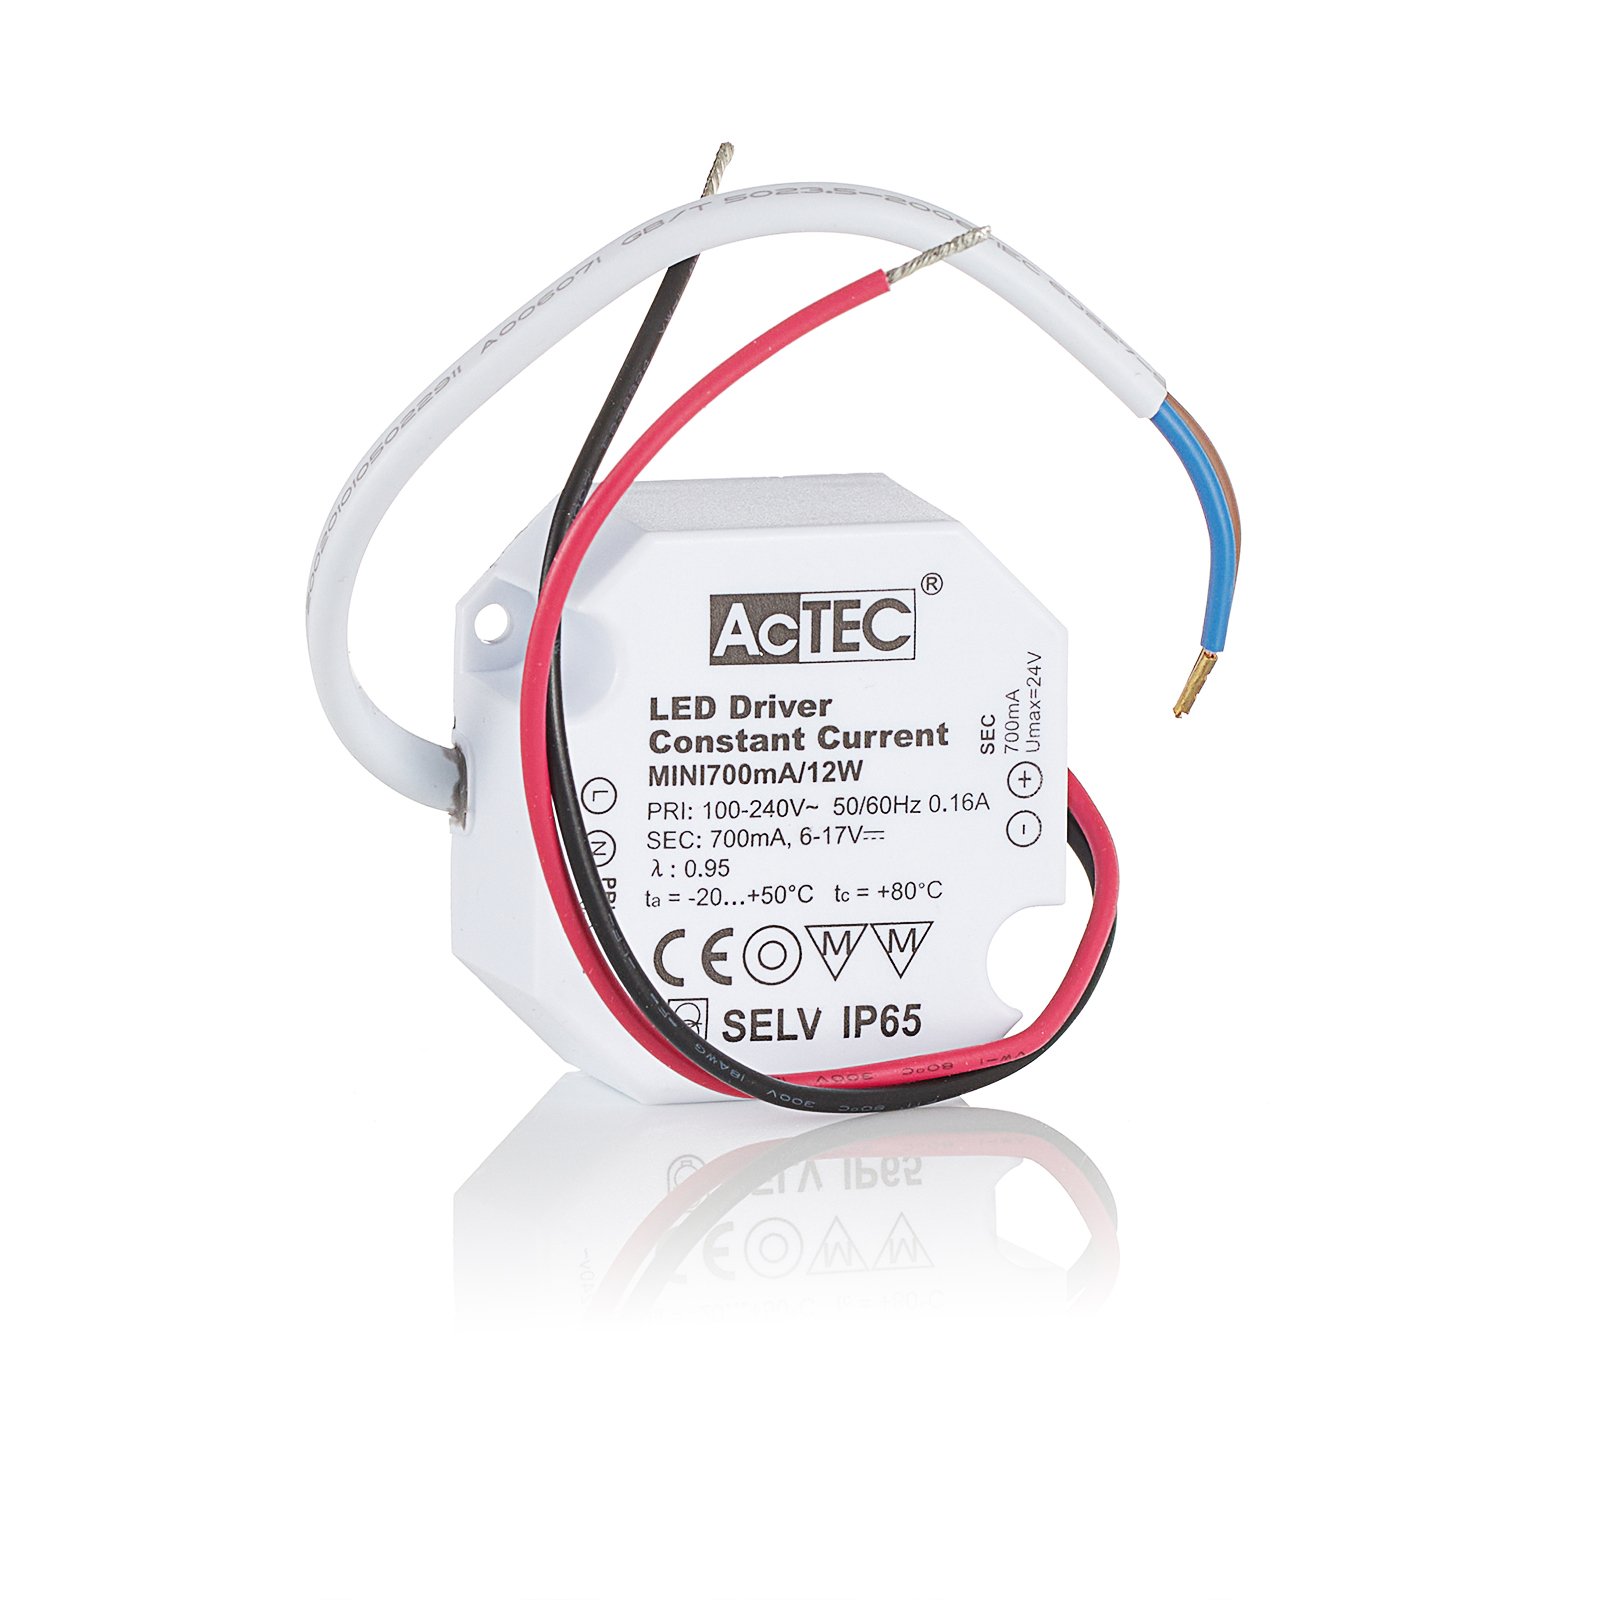 AcTEC Mini LED-drivare CC 700mA, 12W, IP65